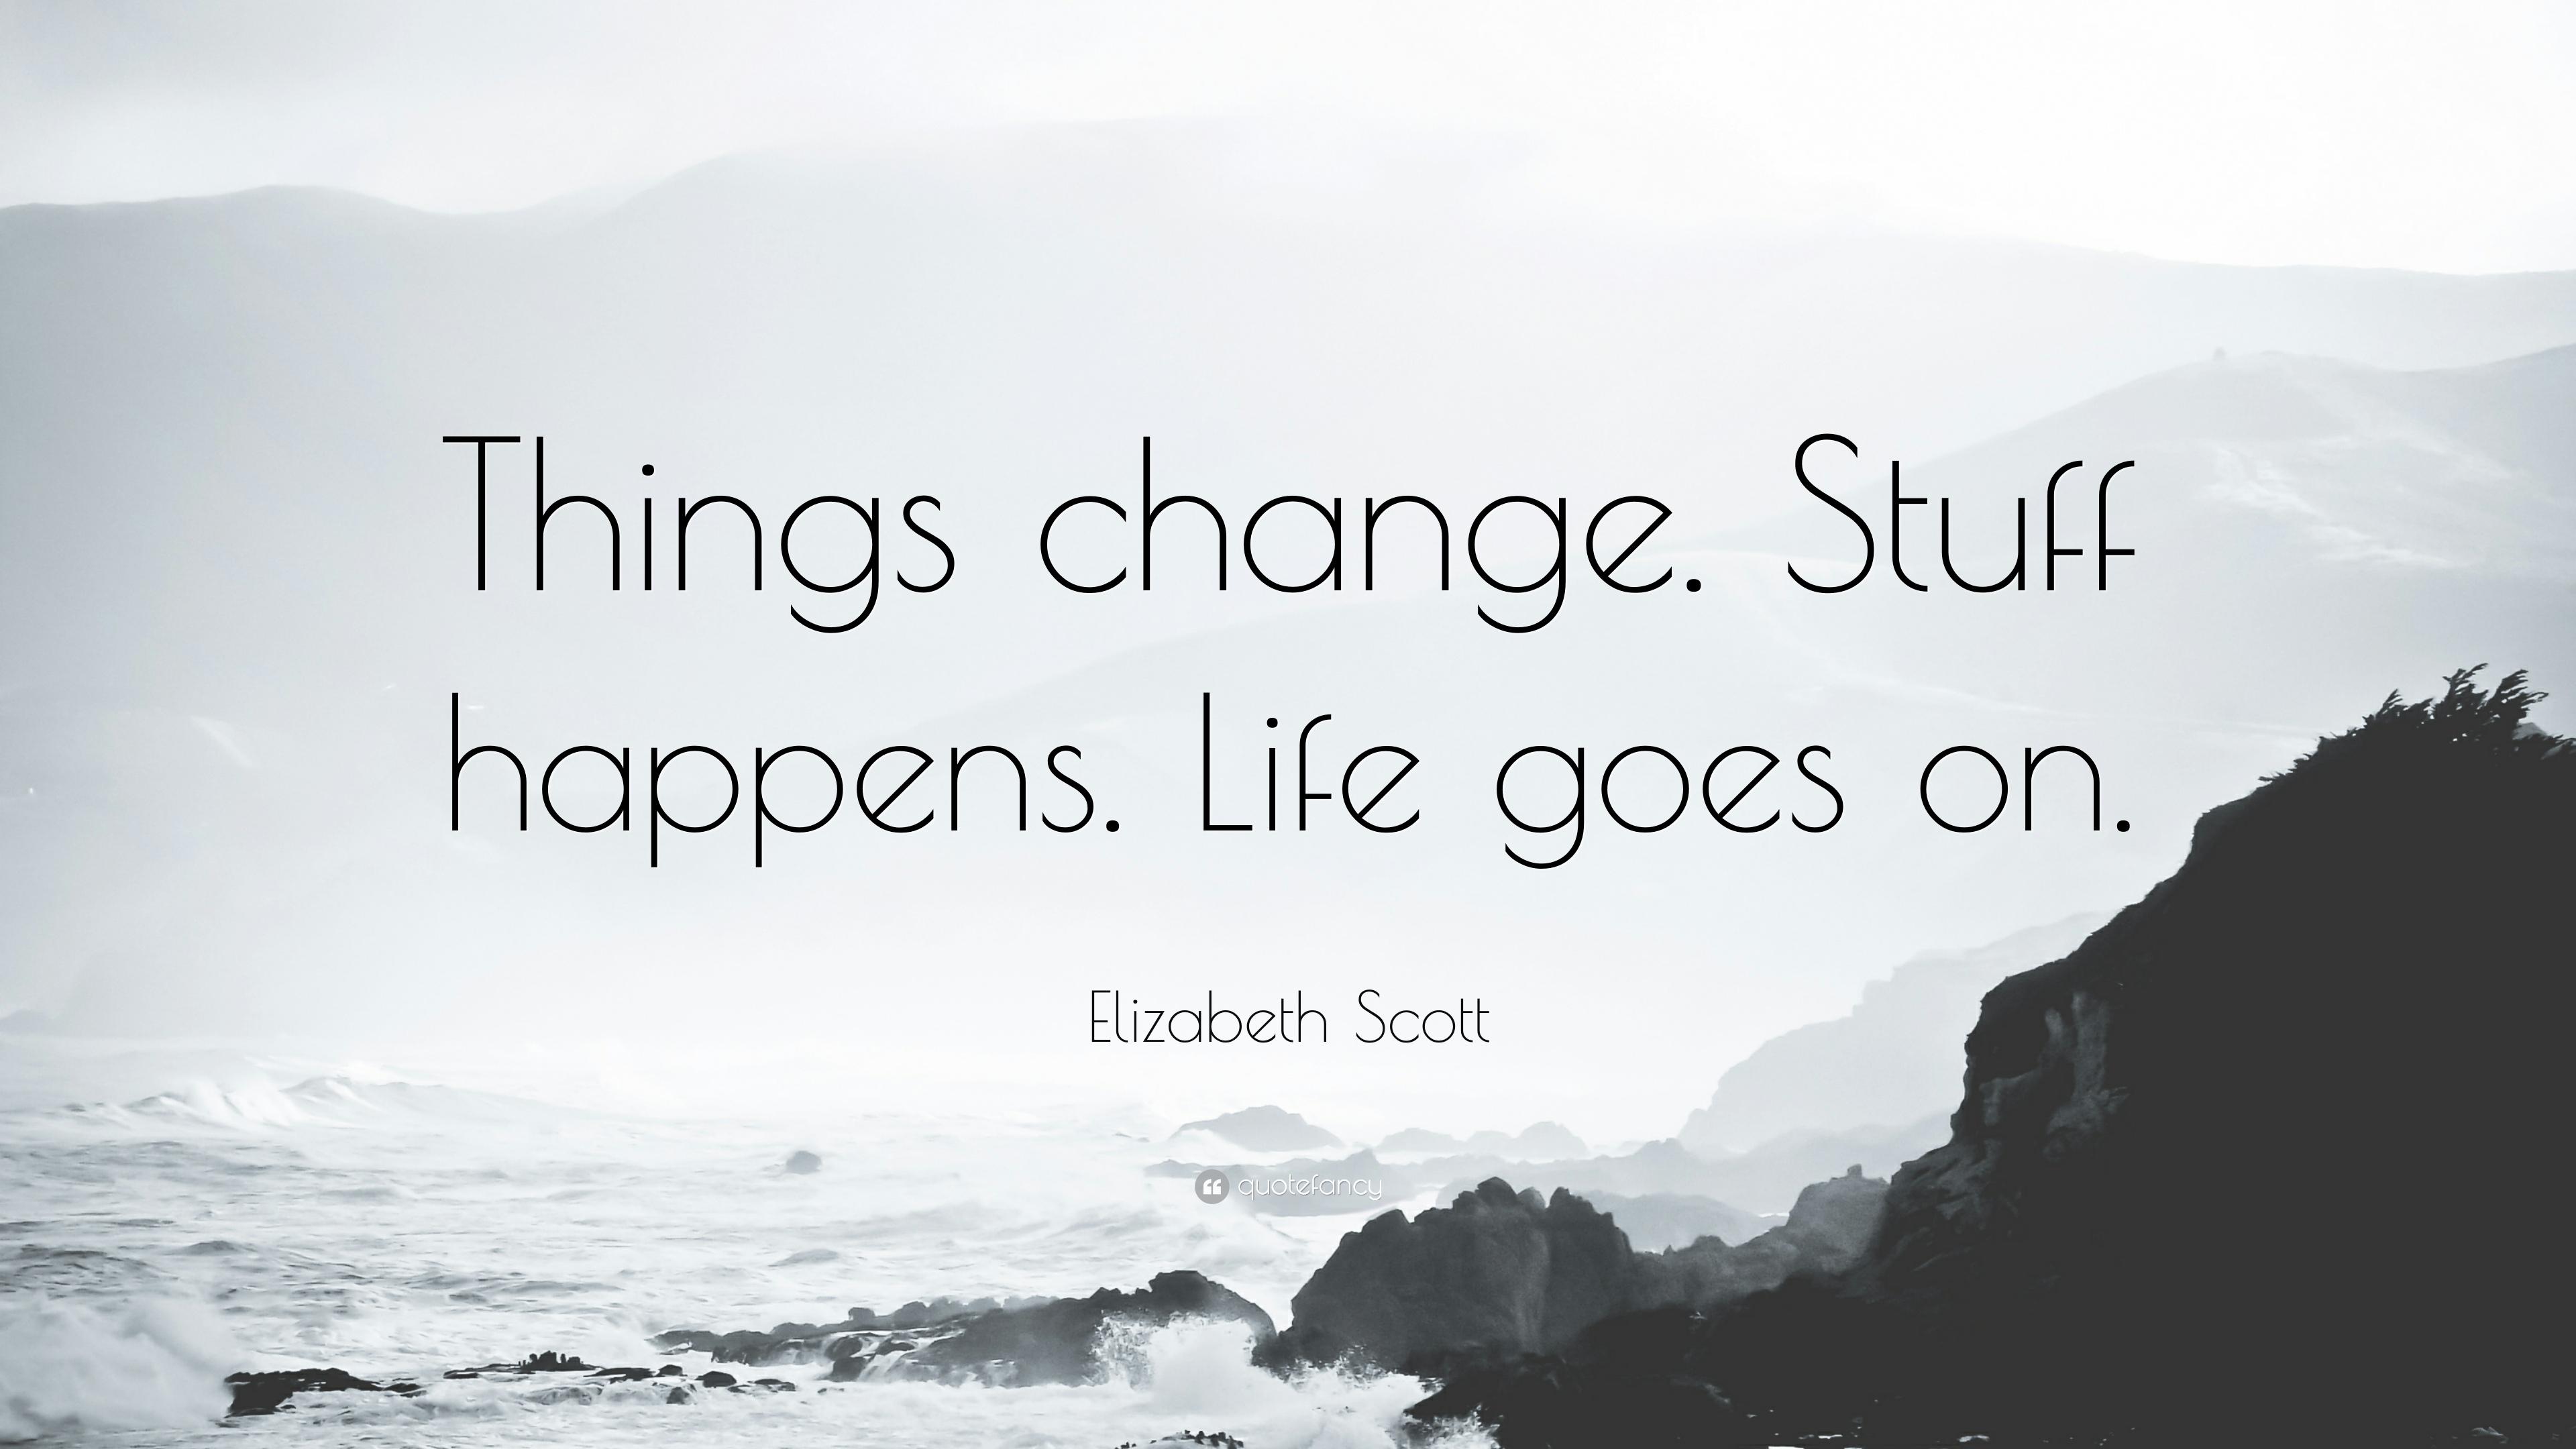 Elizabeth Scott Quote: “Things change. Stuff happens. Life goes